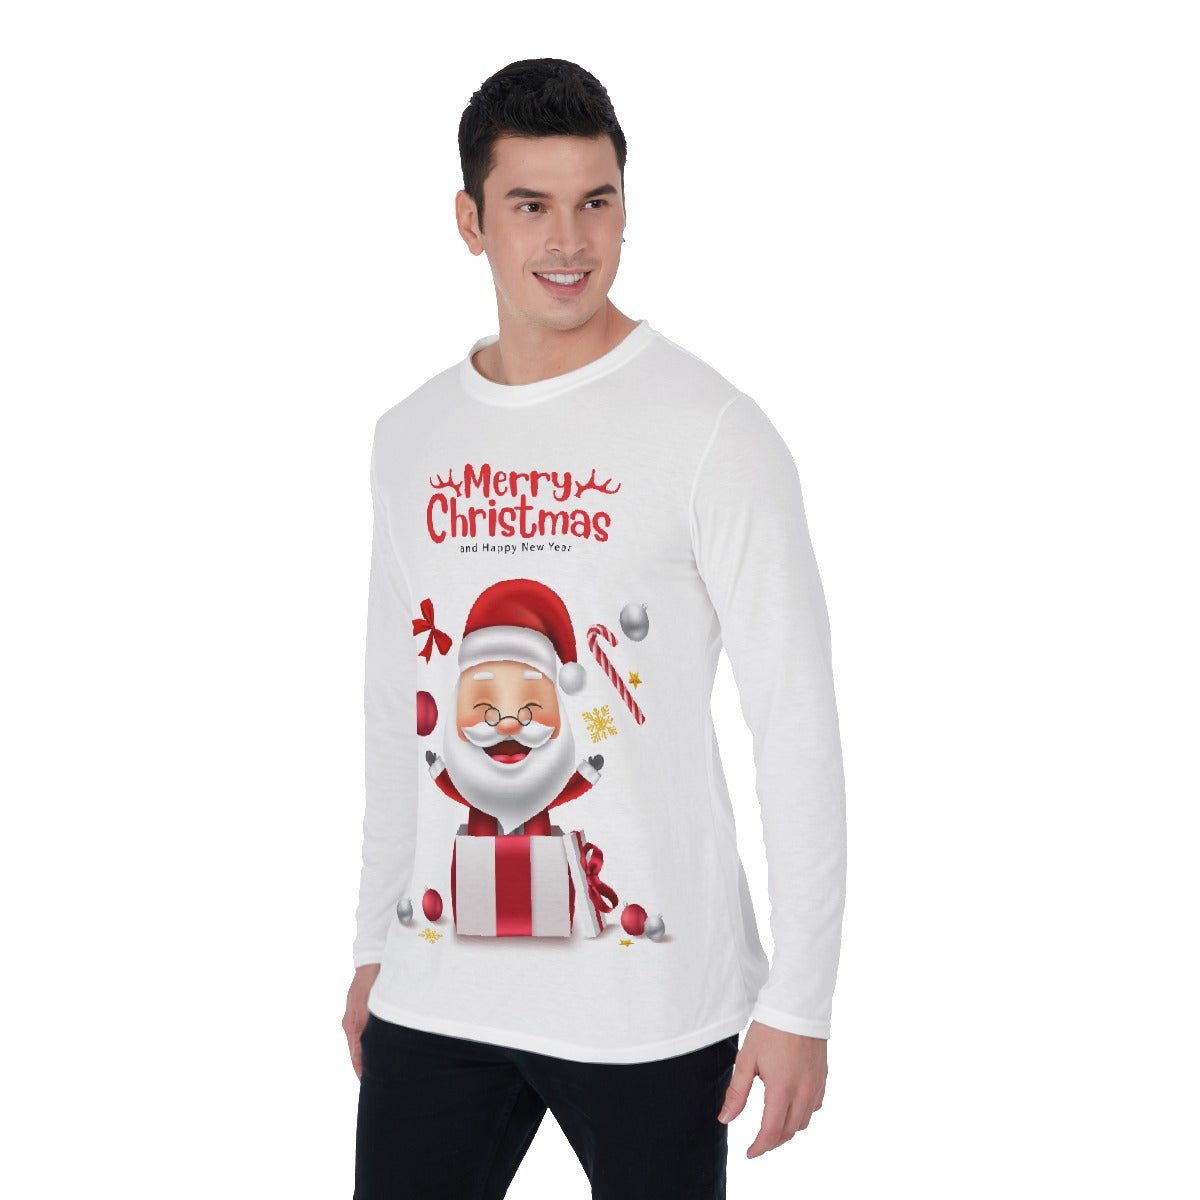 Men's Long Sleeve Christmas T-Shirt - Santa MC HNE - Festive Style